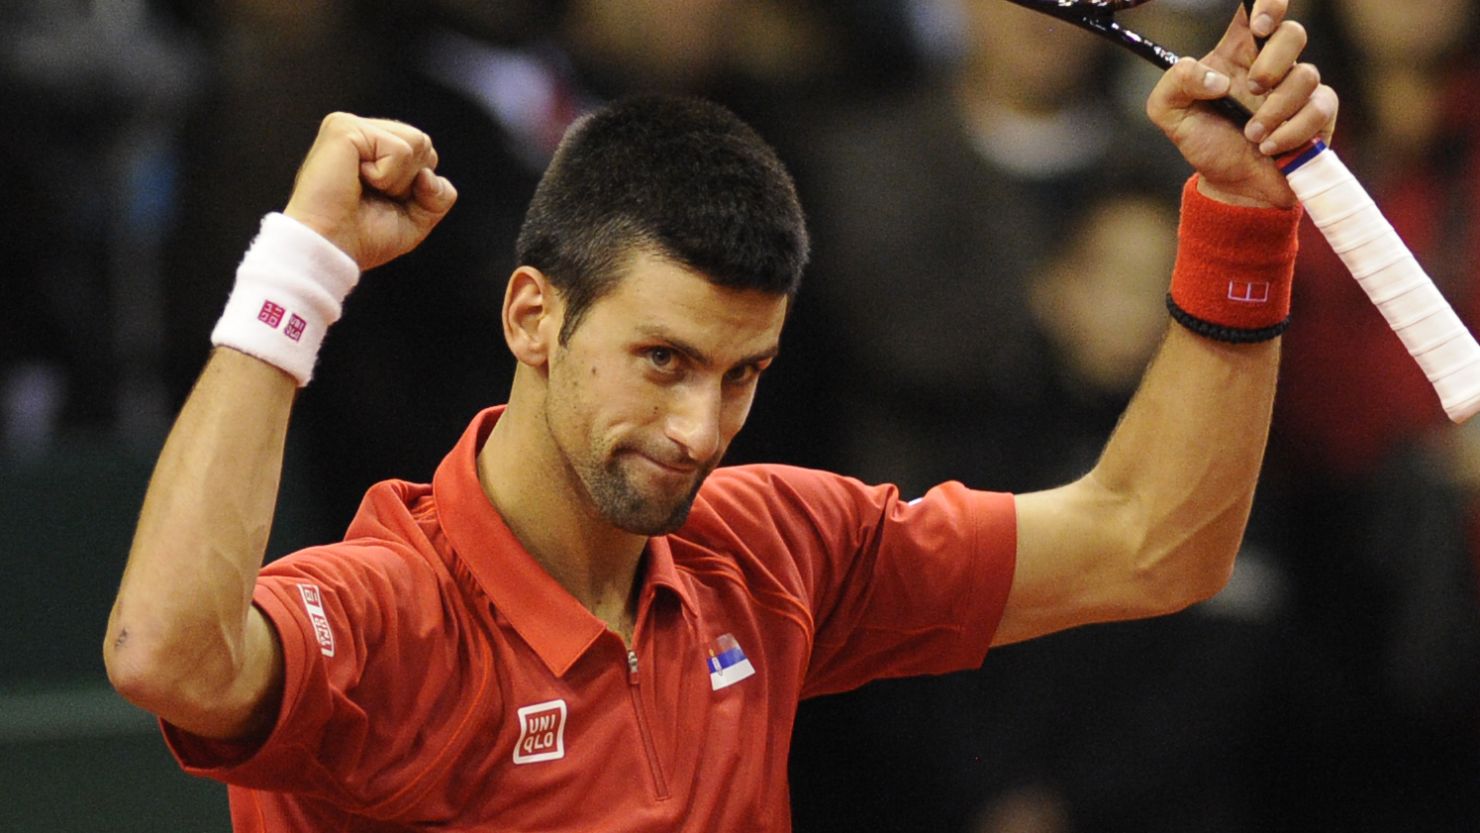 Novak Djokovic celebrates his straight sets victory over Olivier Rochus in the Davis Cup tie in Belgium. 